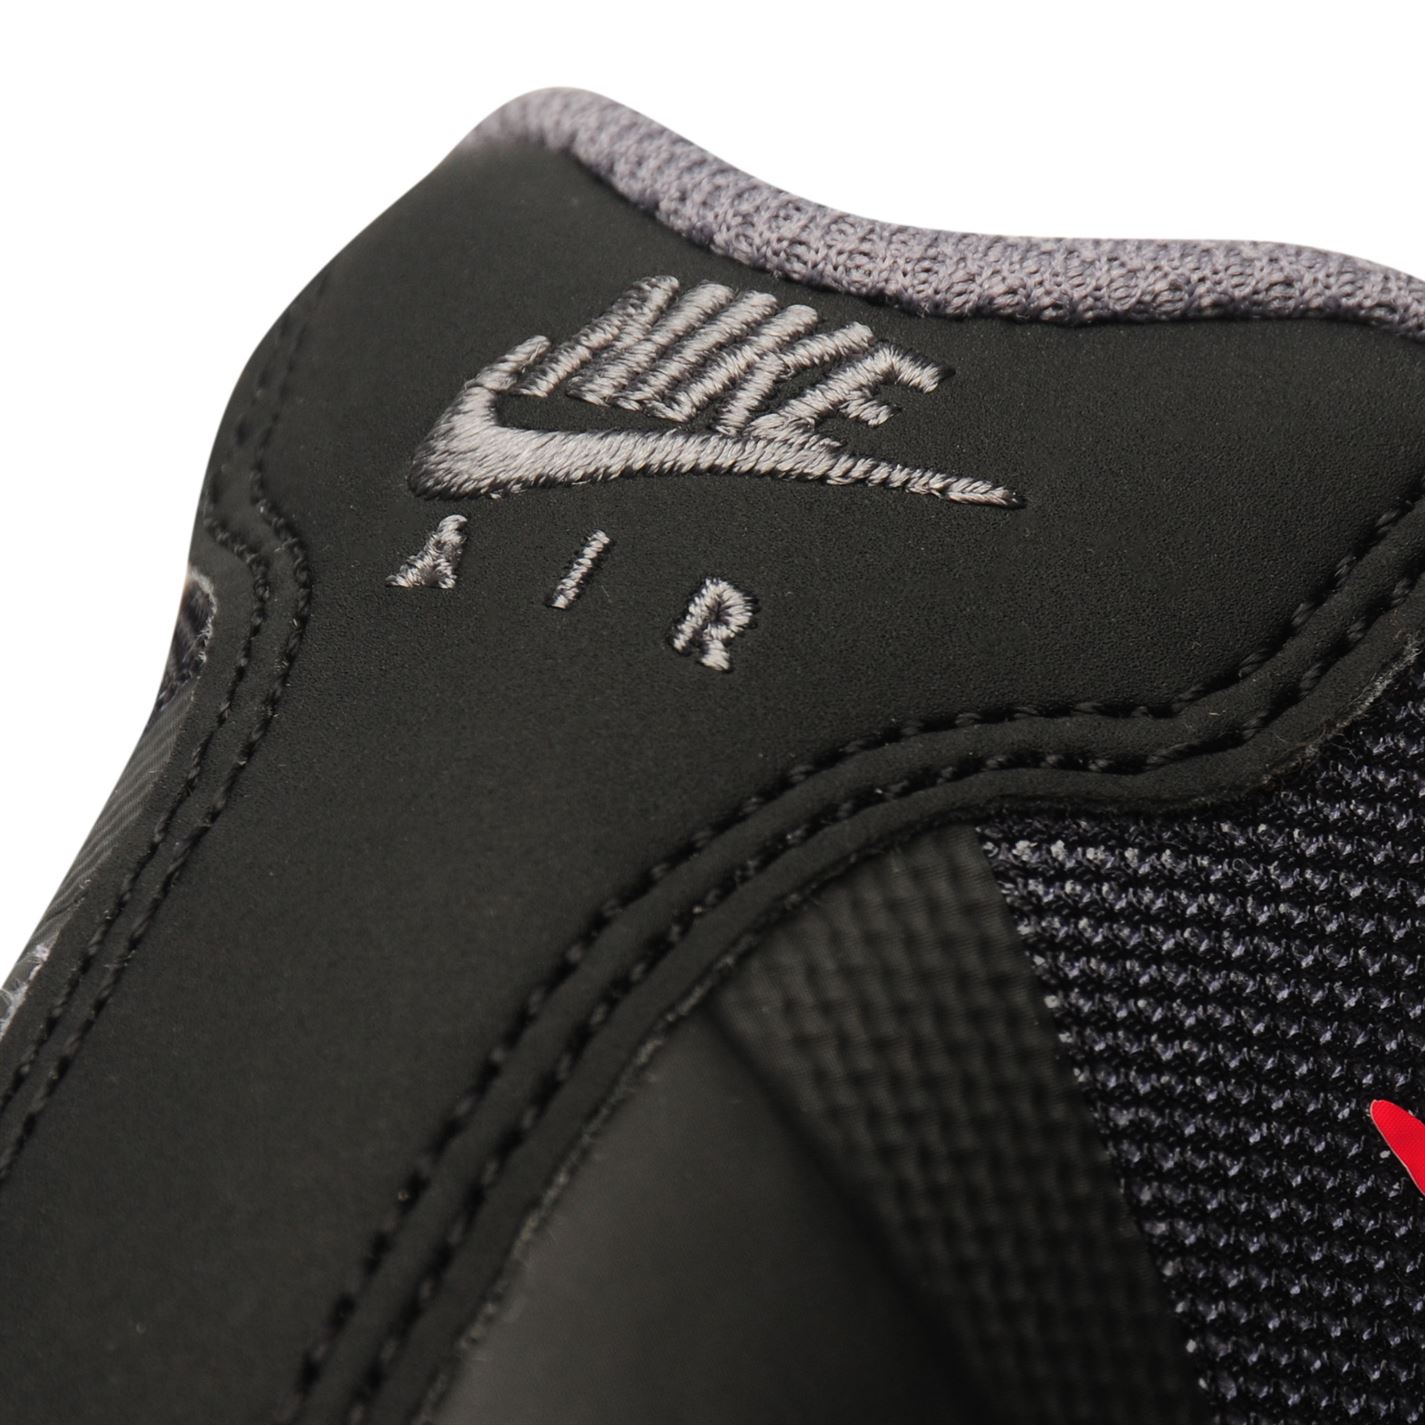 Adidasi sport Nike Air Max Invigor pentru Barbati gri inchis rosu